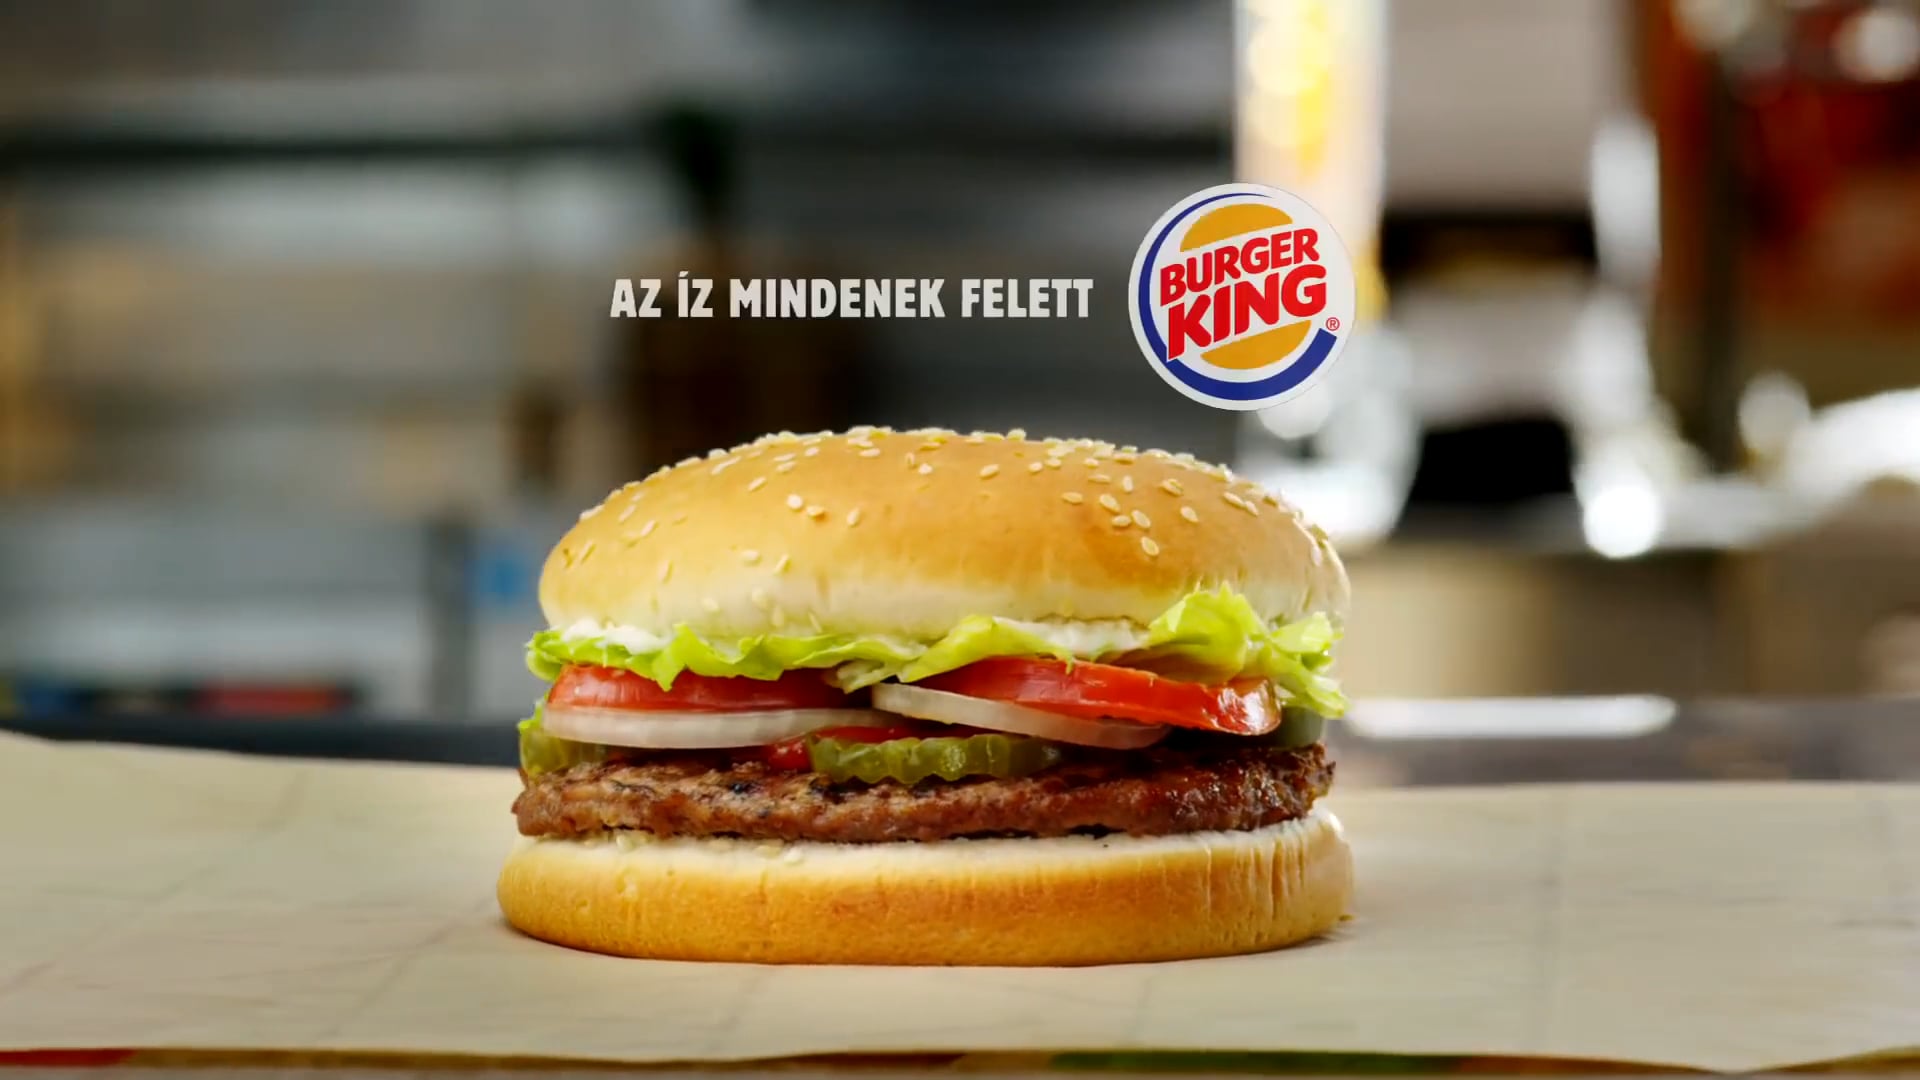 Burger King - Trust in Taste